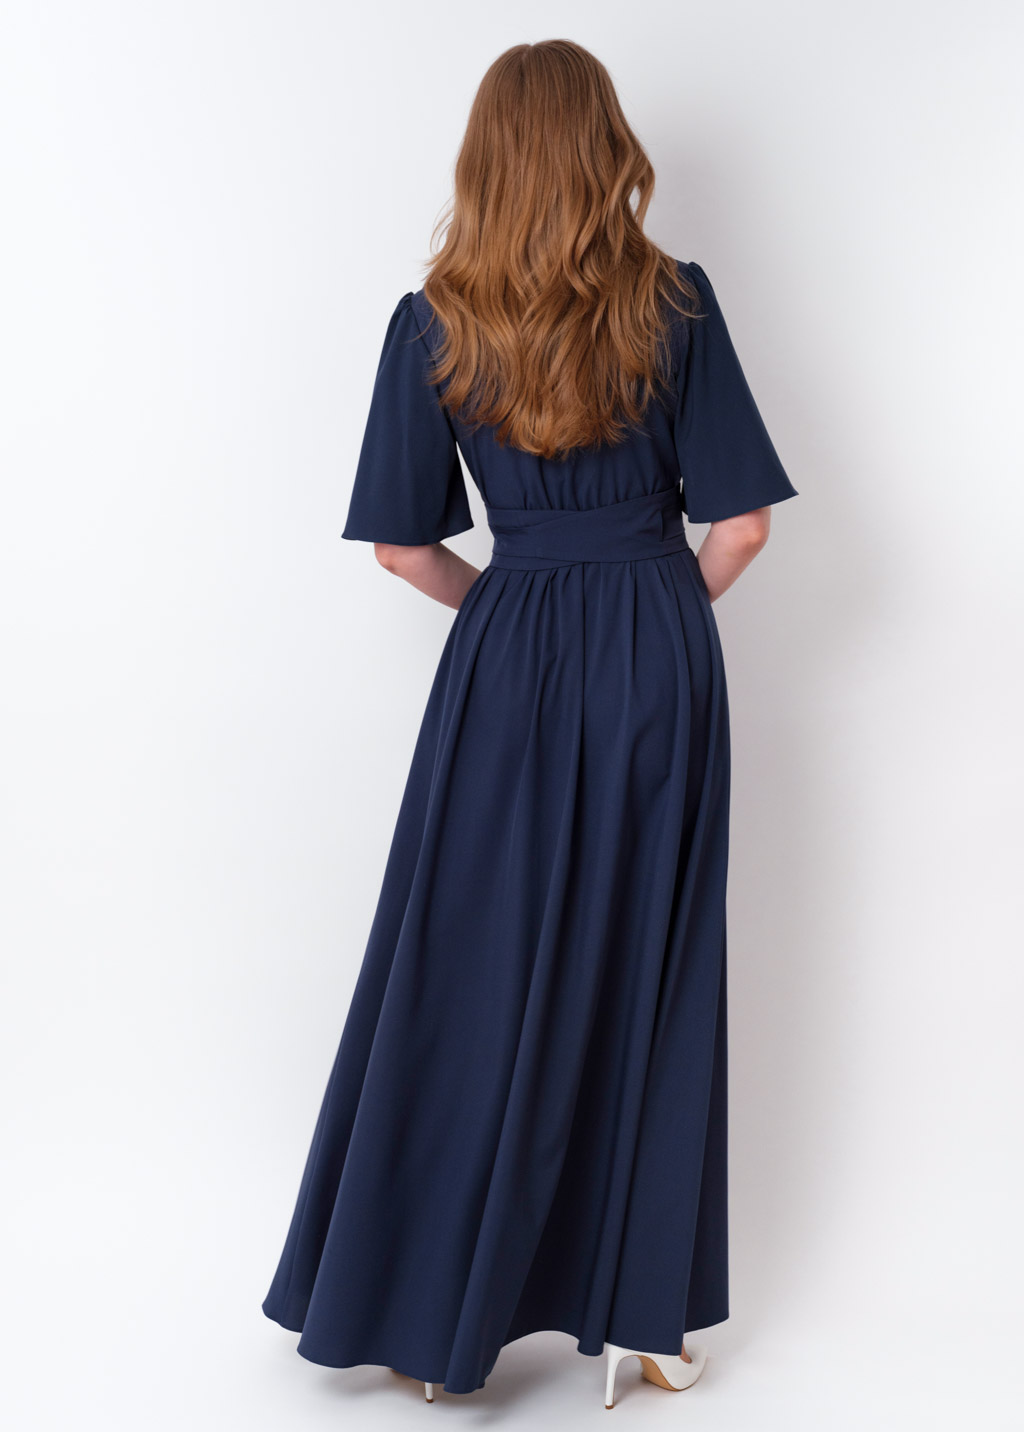 Navy blue long dress with belt